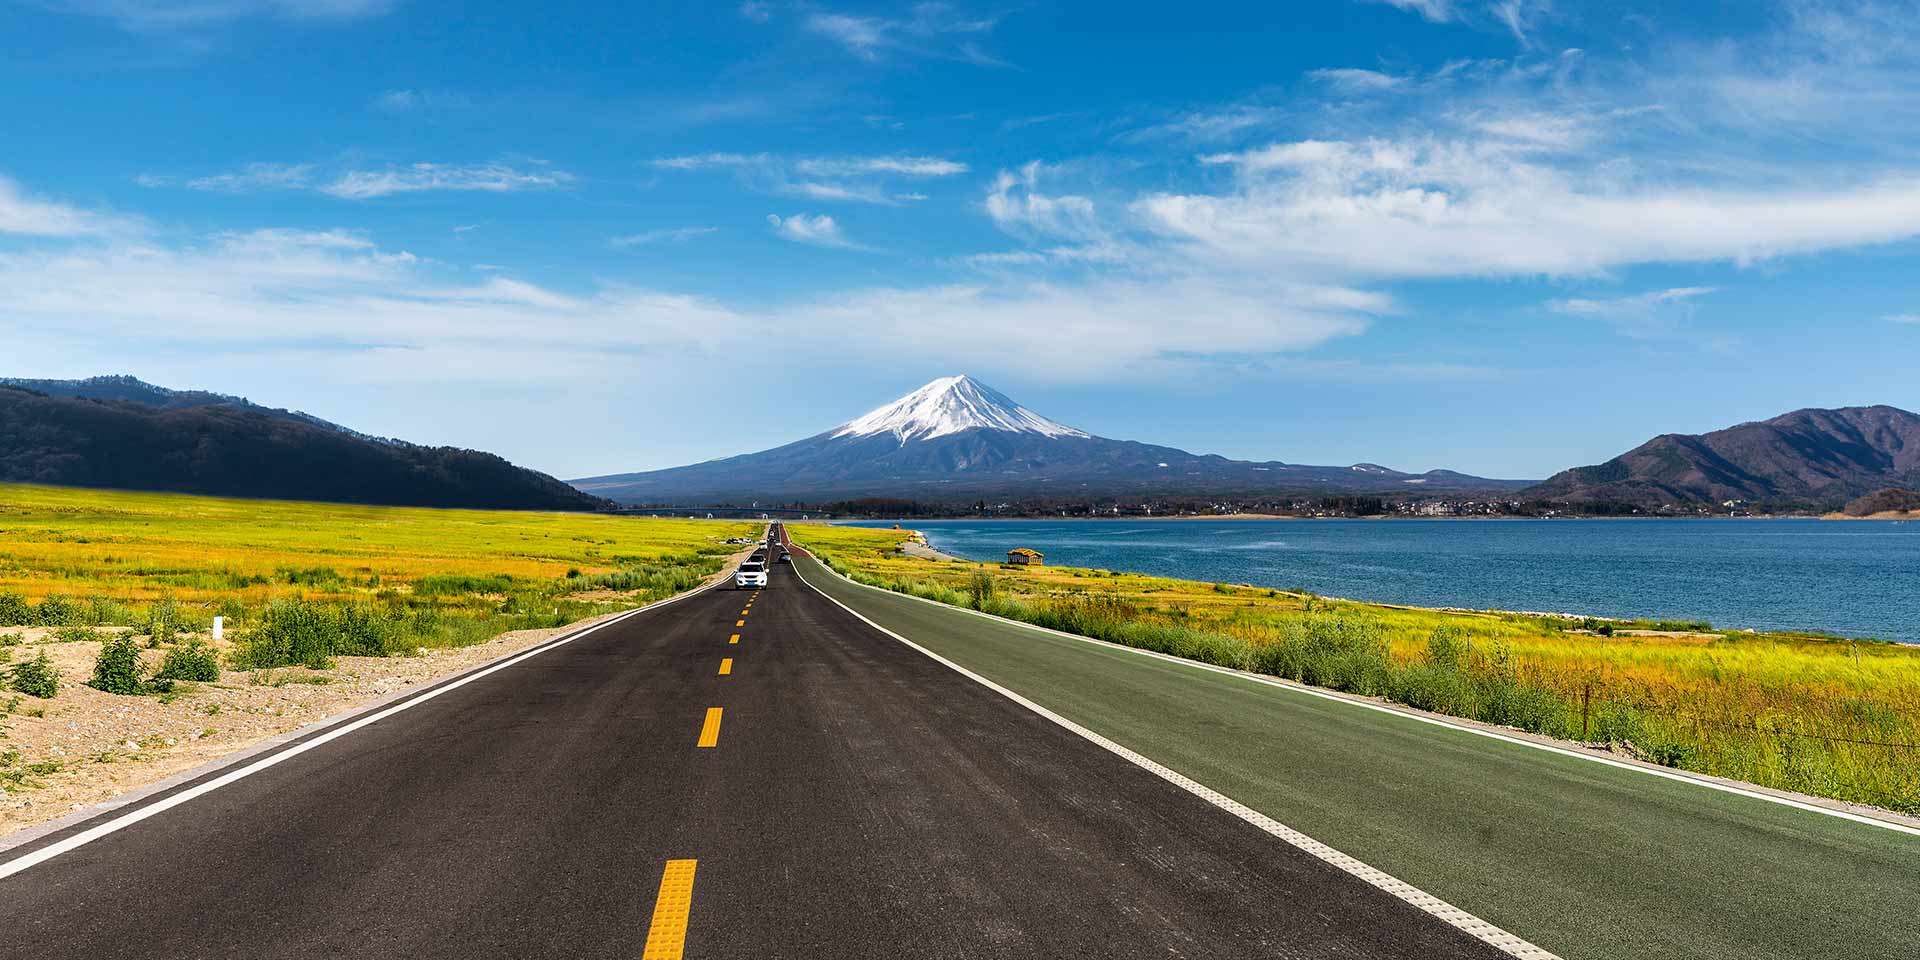 highway leading to mount fuji in Japan